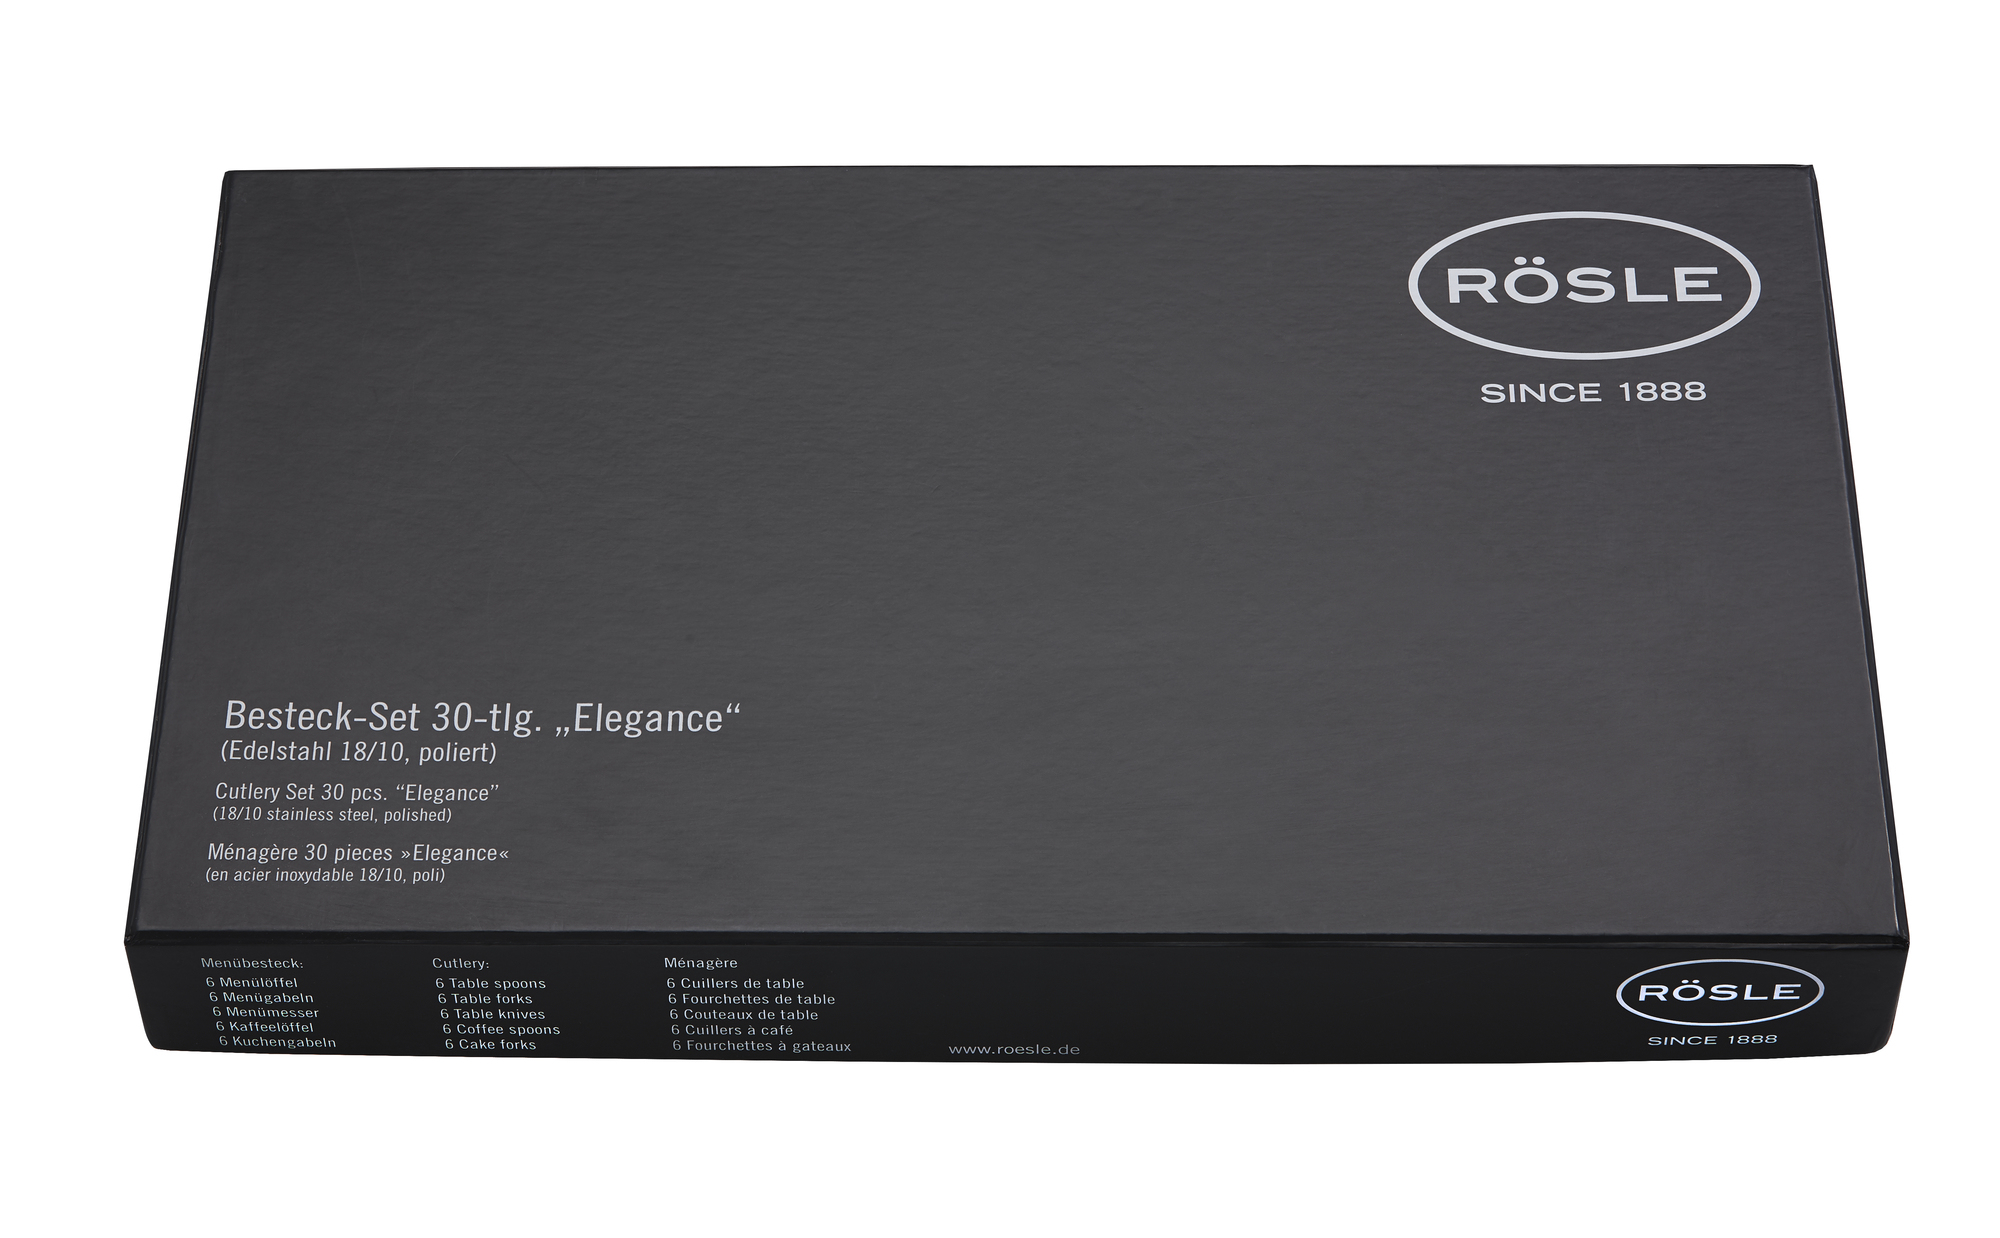 Rösle 13207 - Messerkasten/Besteck-Set - Edelstahl - Edelstahl - 1,75 kg - Box - 30 Stück(e)